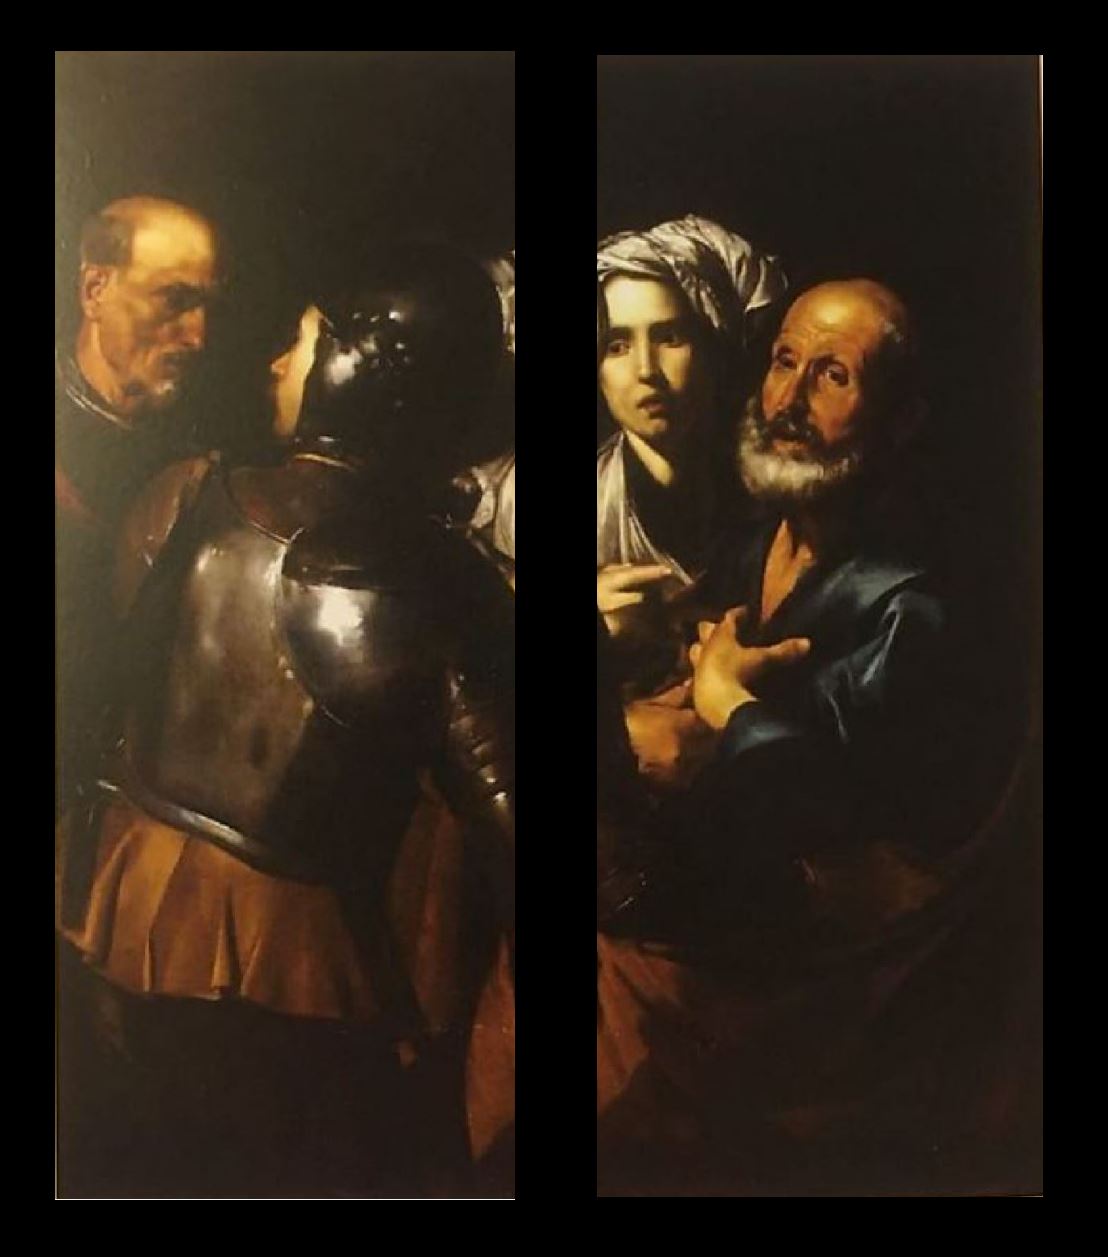 1615 ca Jusepe de Ribera, Denial of Saint Peter location unknown schema 2